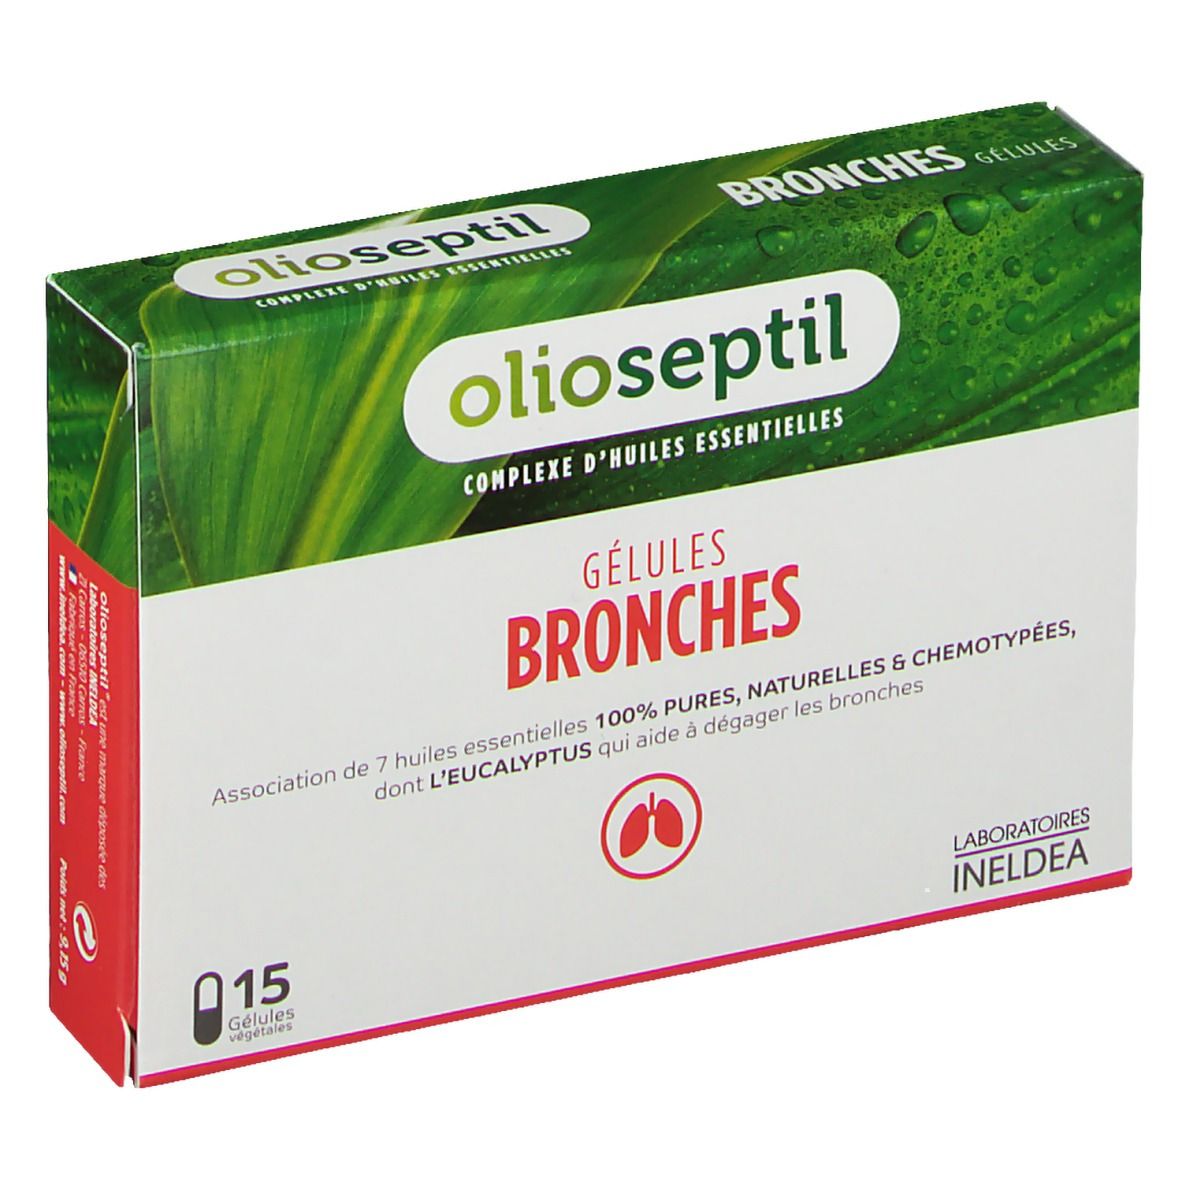 Olioseptil® bronches